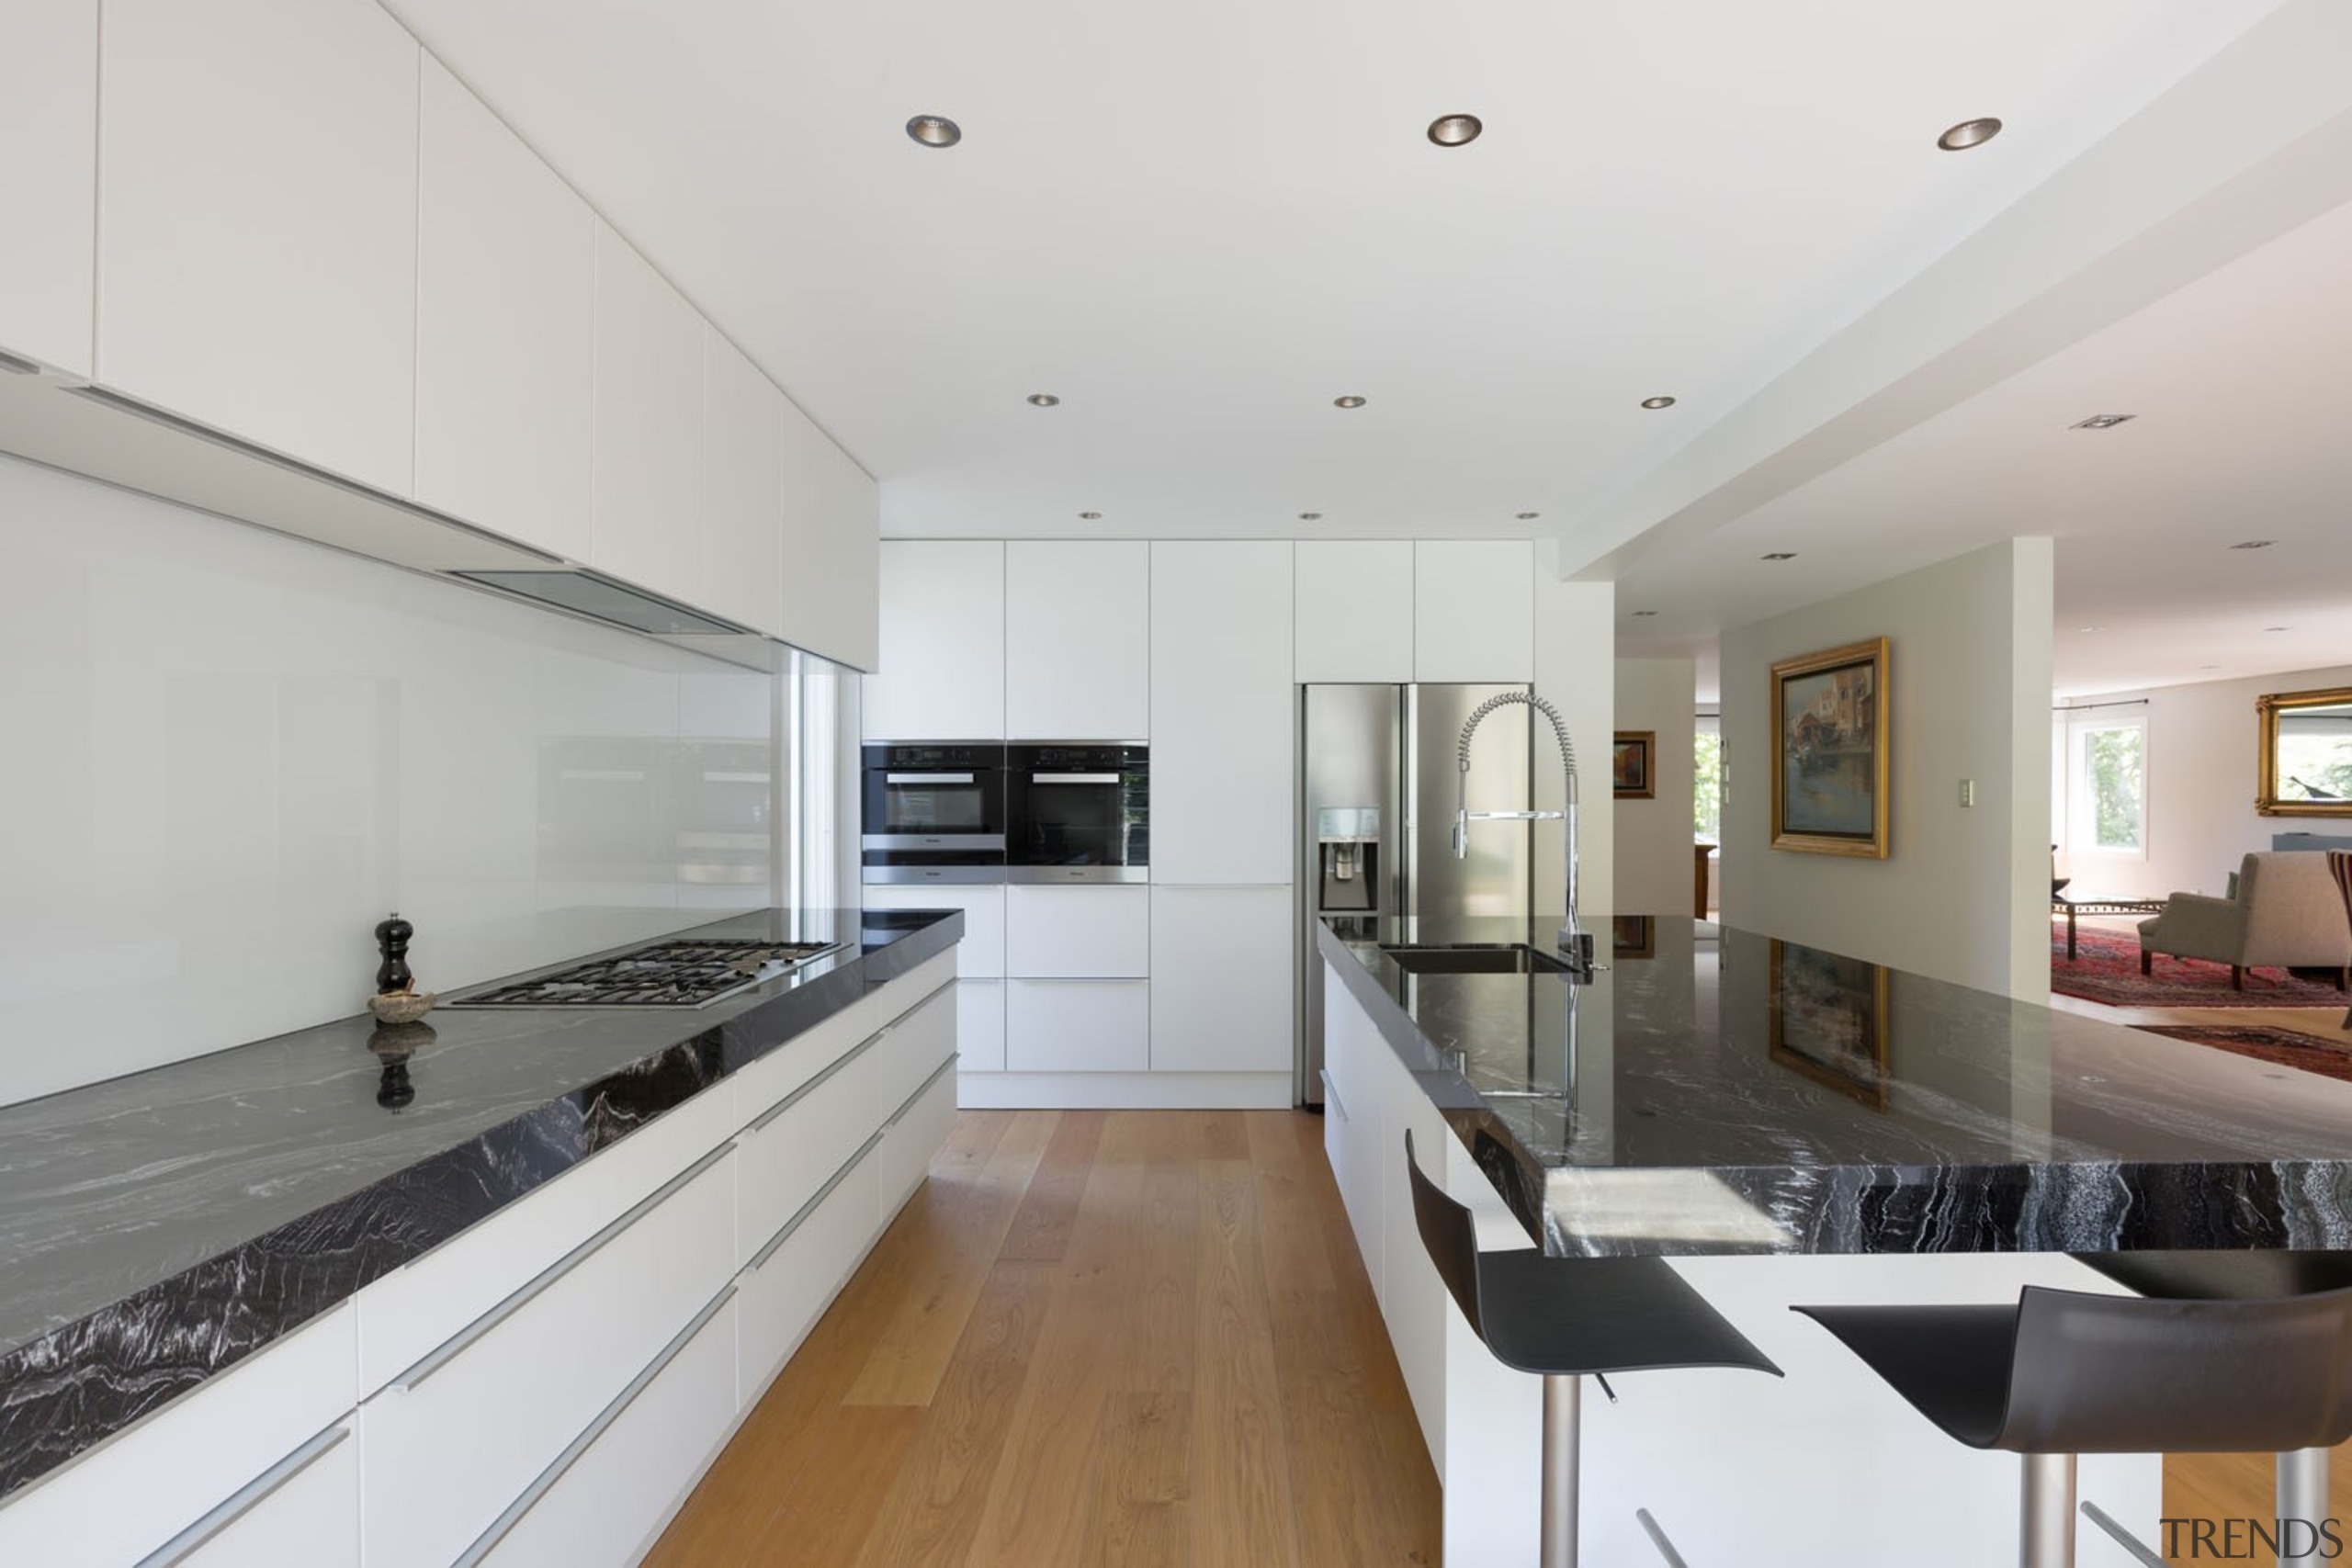 IMGL0257-21 - Dingle Road - countertop | interior countertop, interior design, kitchen, property, real estate, gray